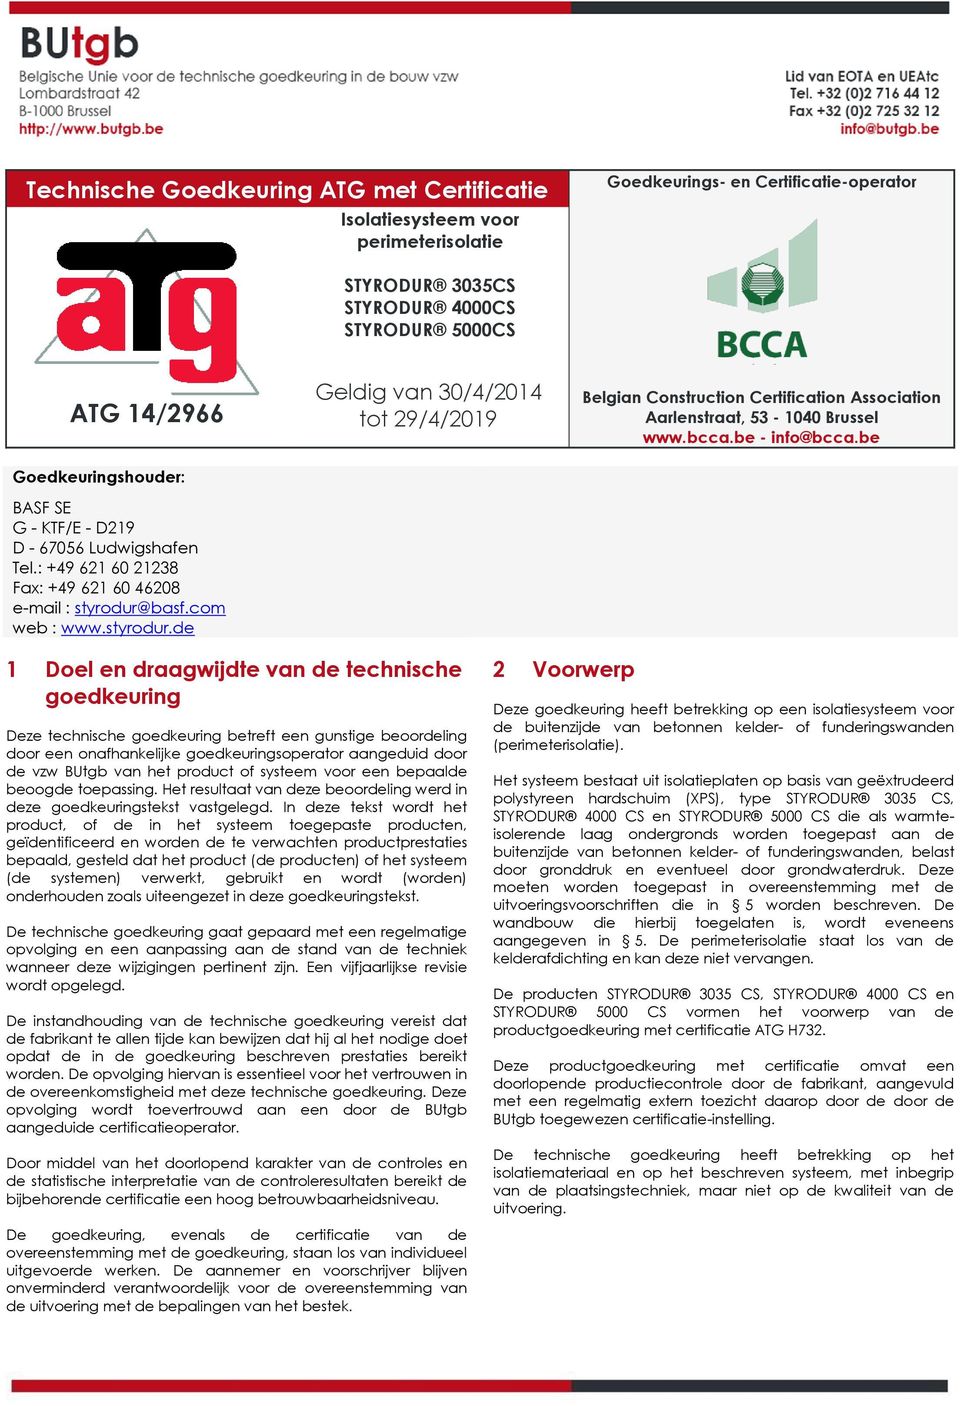 basf.com web : www.styrodur.de Geldig van 30/4/2014 tot 29/4/2019 Belgian Construction Certification Association Aarlenstraat, 53-1040 Brussel www.bcca.be - info@bcca.